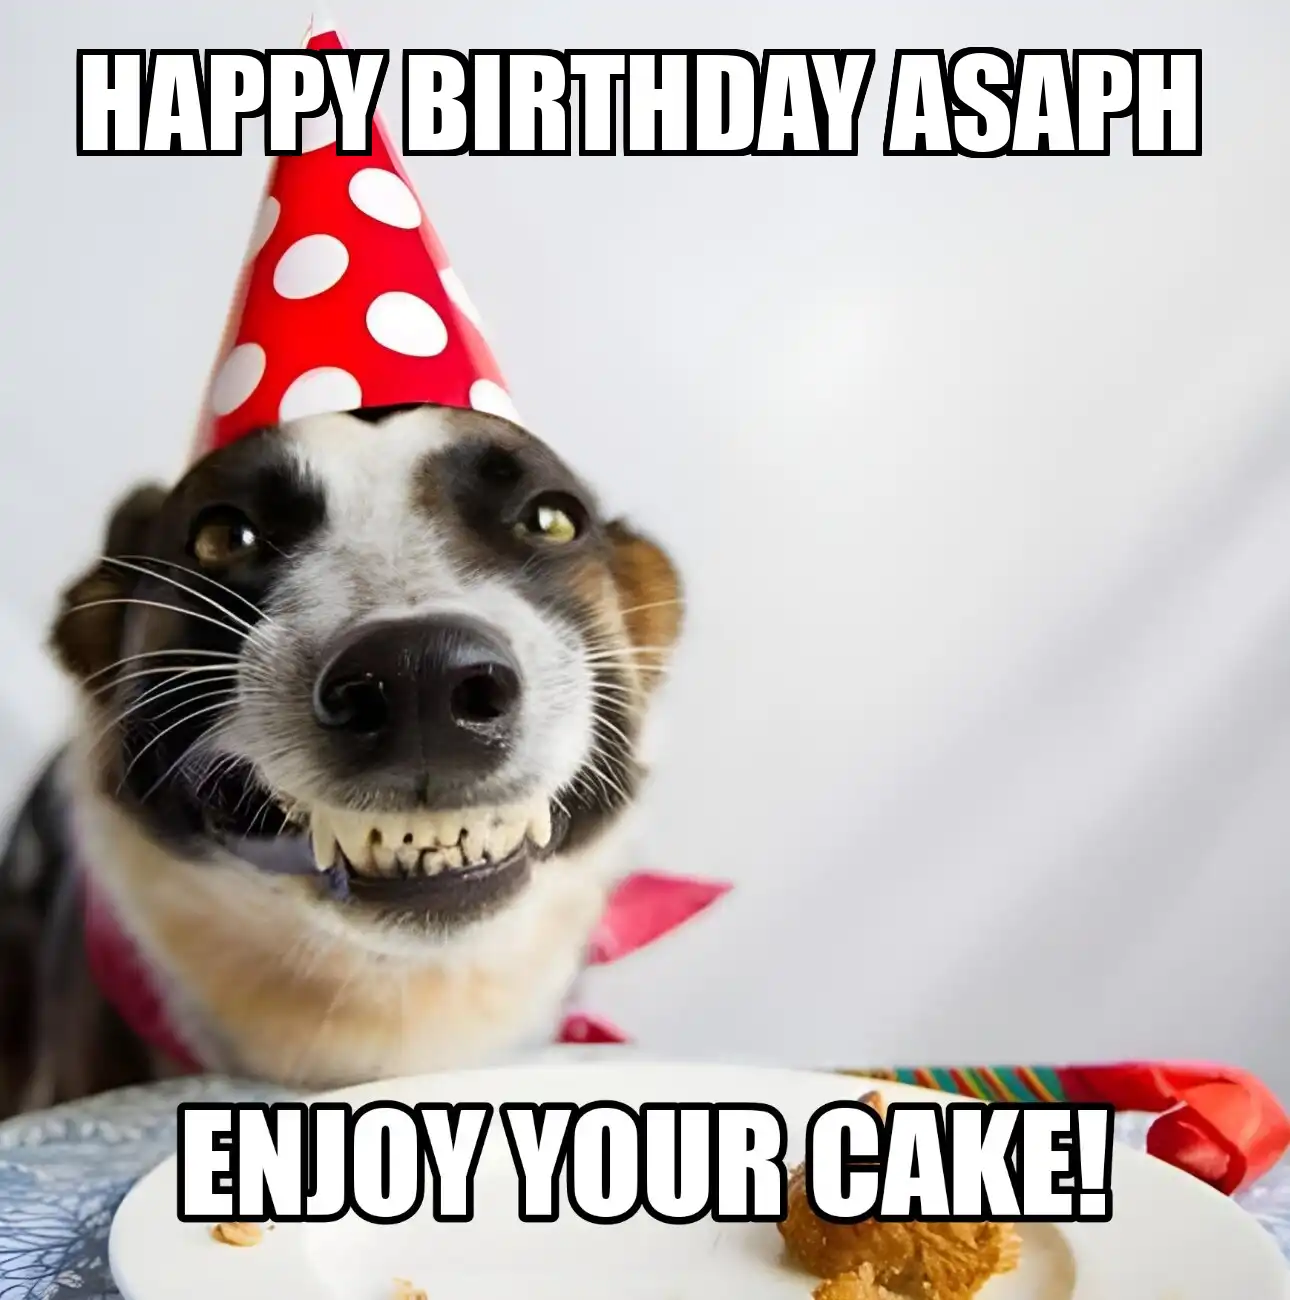 Happy Birthday Asaph Enjoy Your Cake Dog Meme